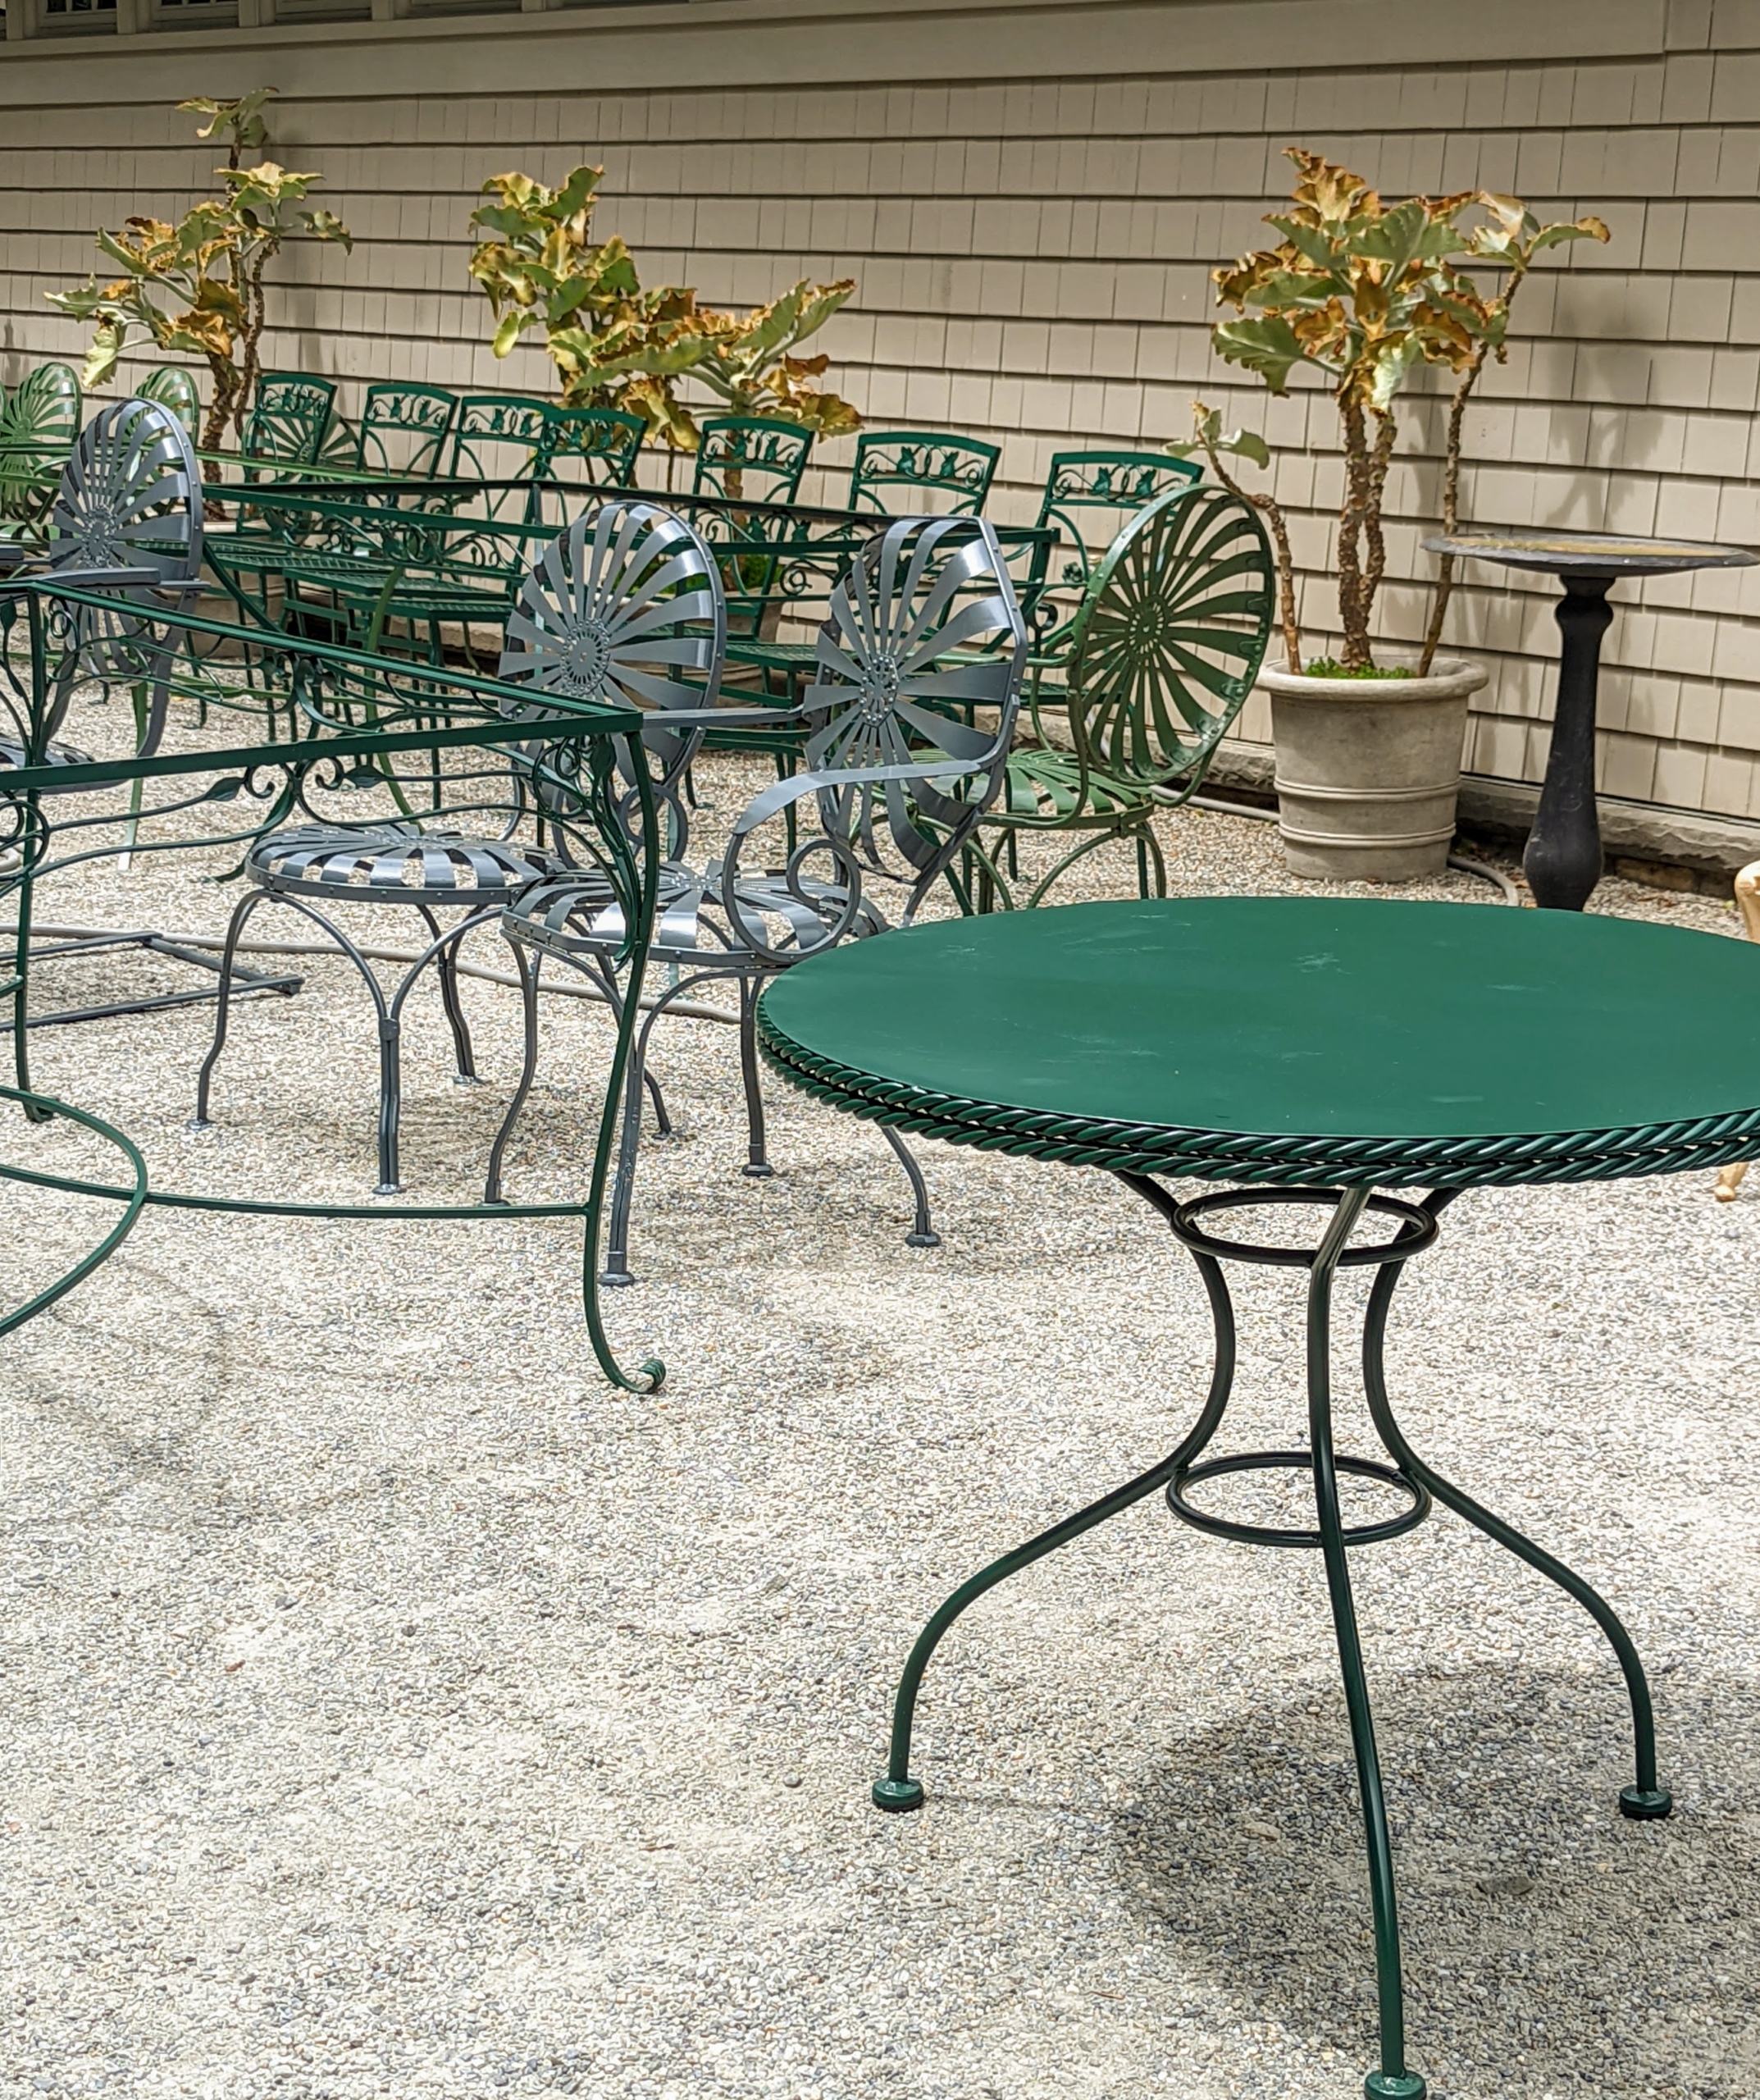 Repainting My Outdoor Metal Furniture - The Martha Stewart Blog